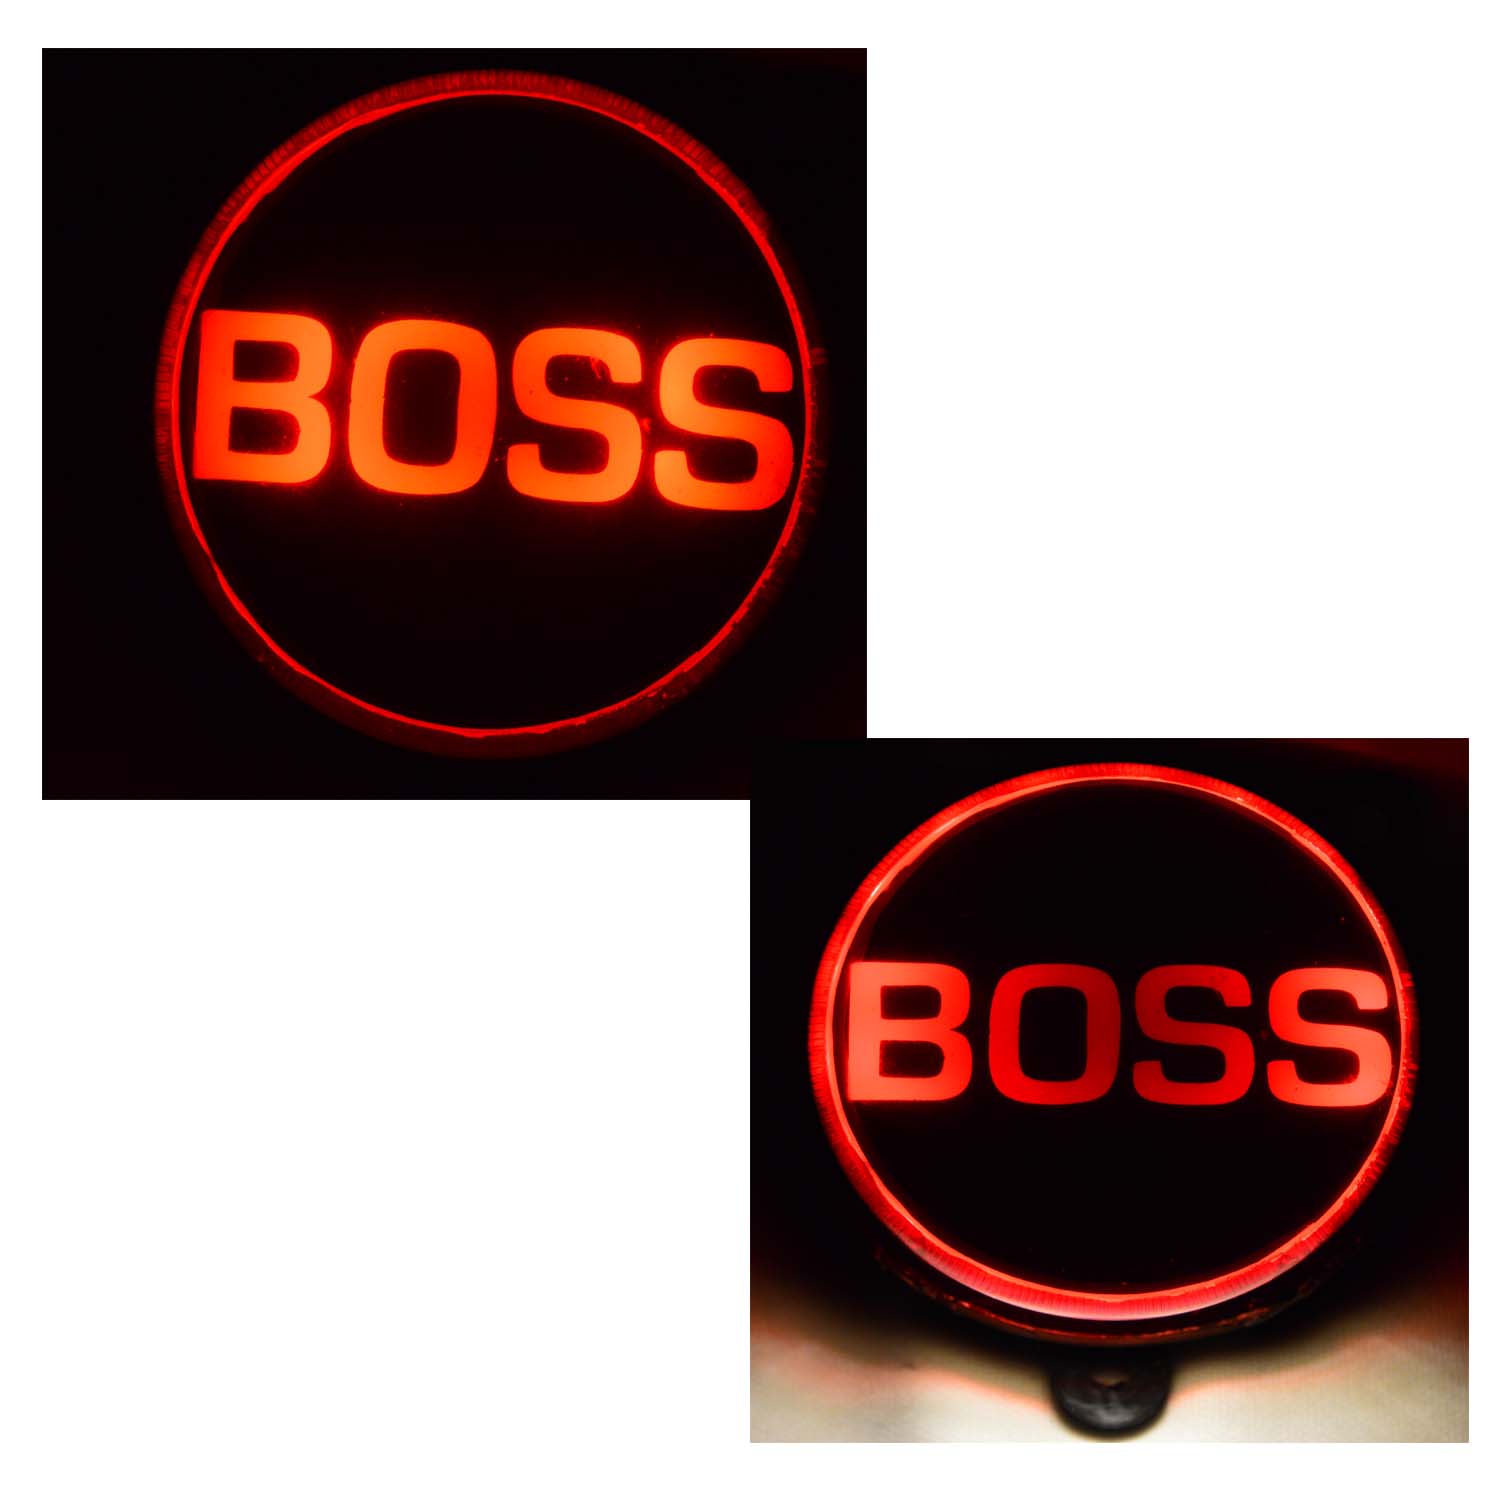 Boss Logo PNG Transparent & SVG Vector - Freebie Supply